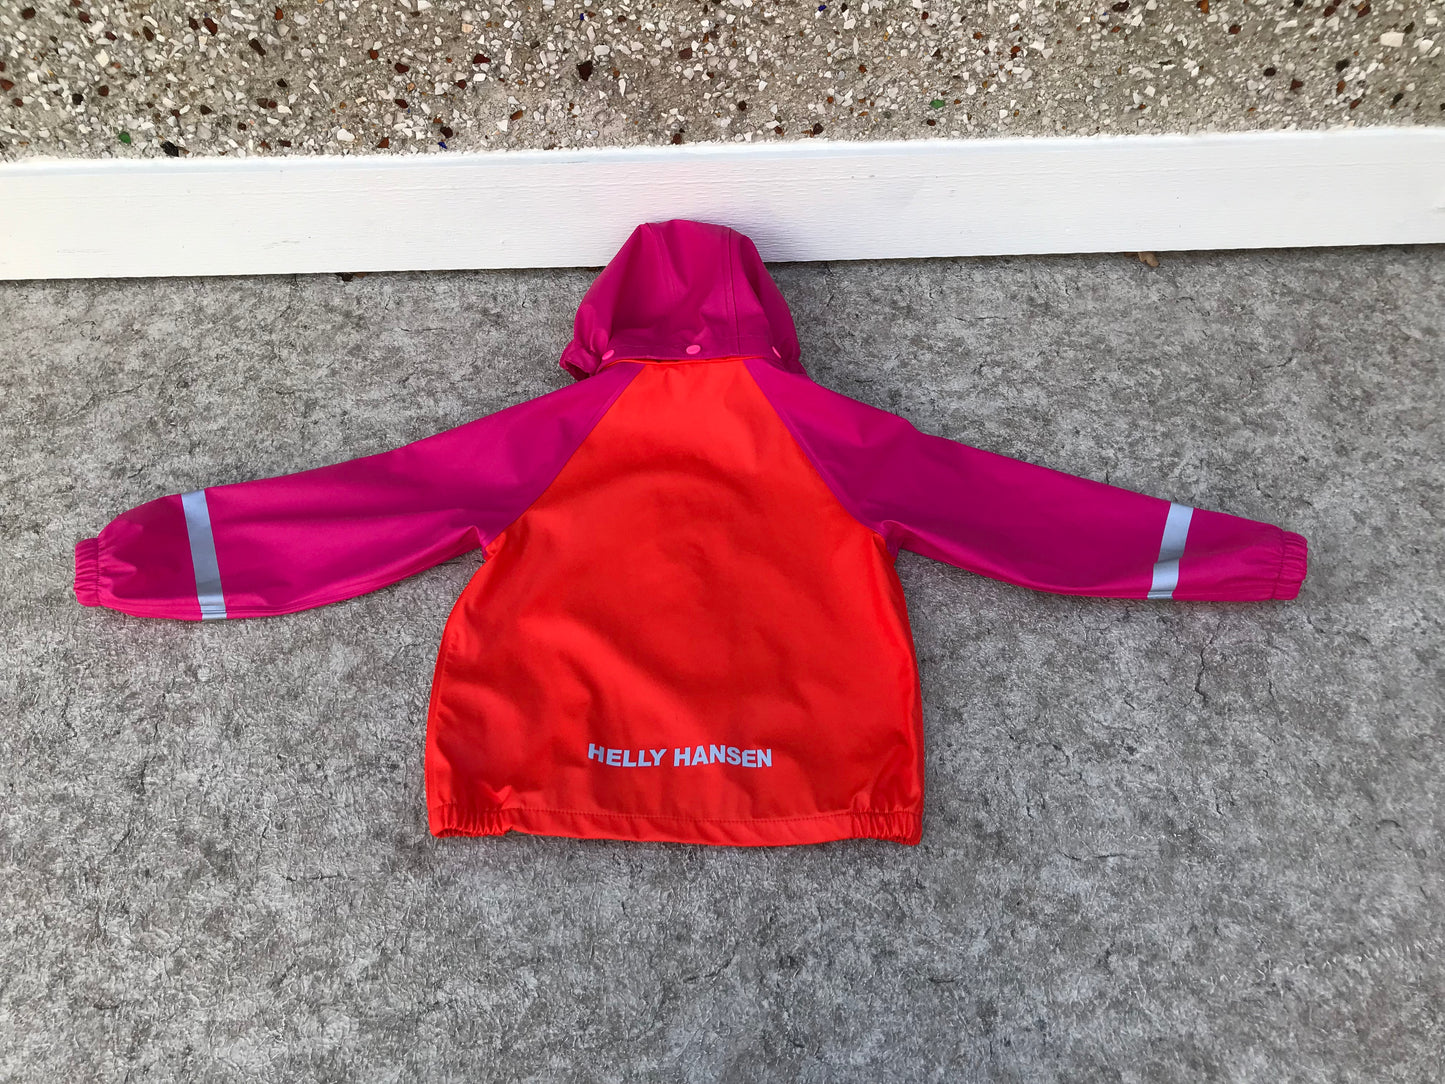 Rain Coat and Pants Child Size 6 Helly Hansen Fushia Pink Orange With Reflectors Fully Waterproof New Demo